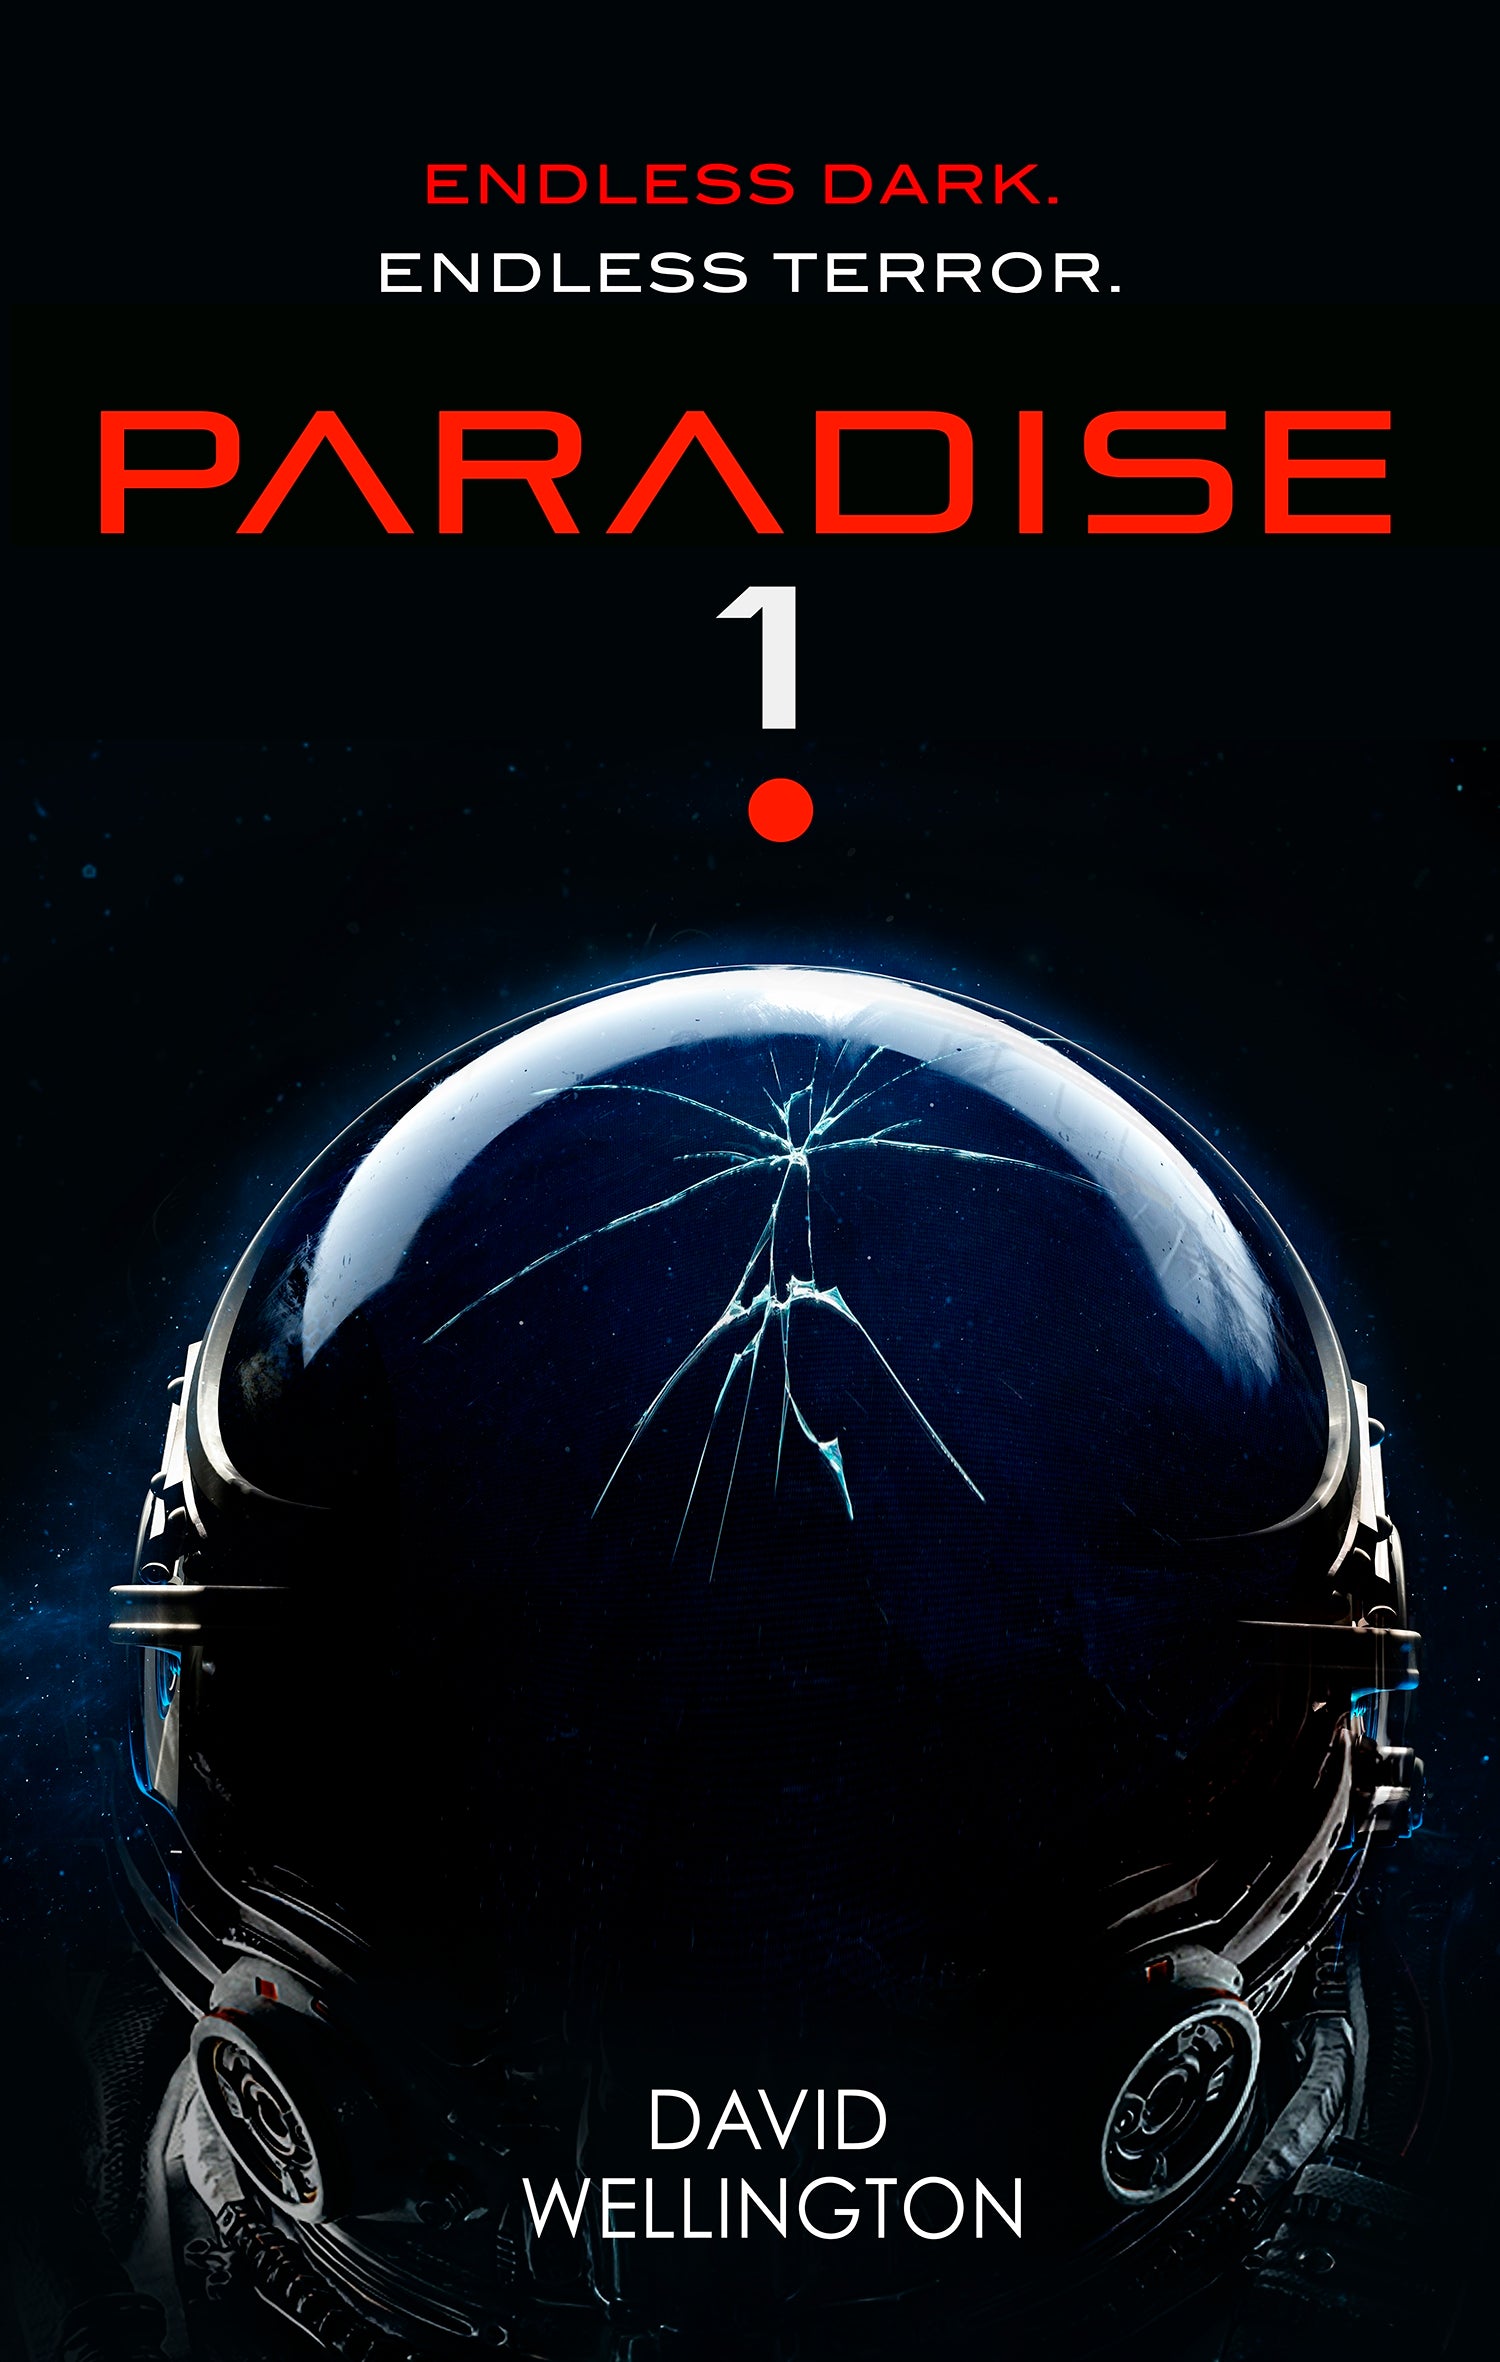 Paradise-1 by David Wellington